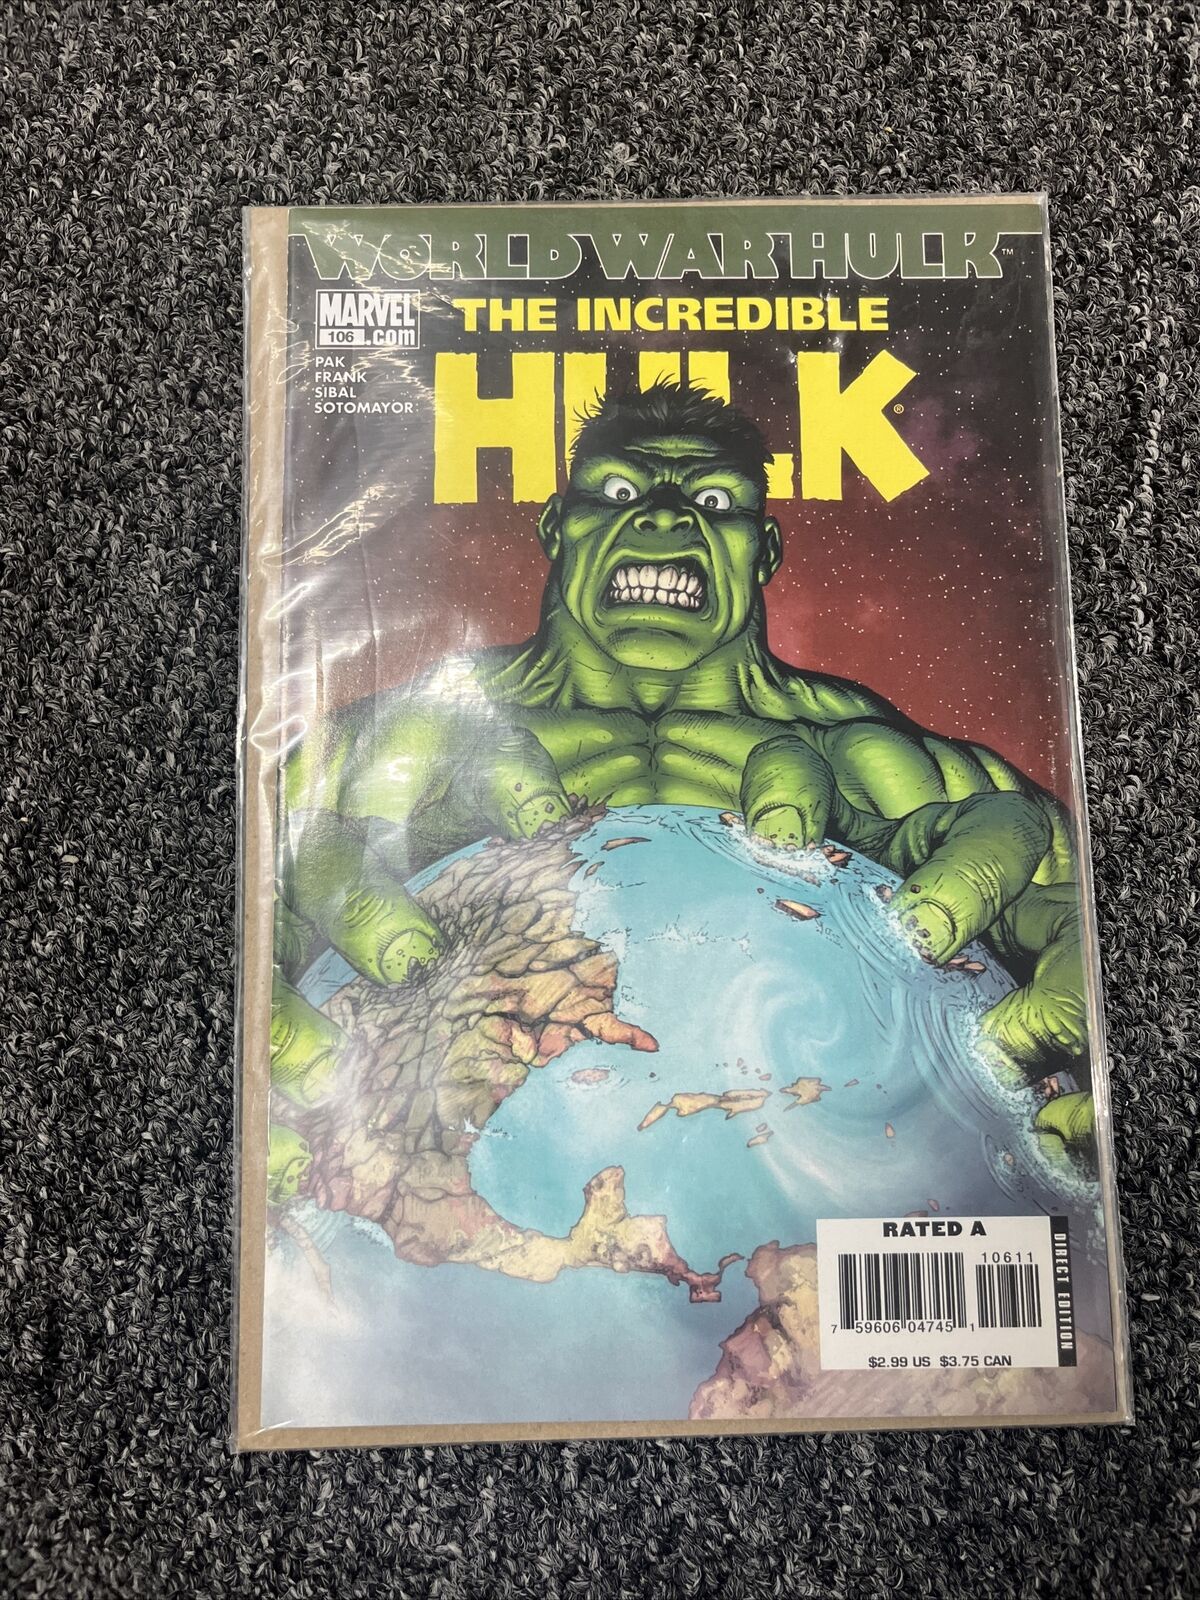 The Incredible Hulk #106 (Marvel Comics July 2007)